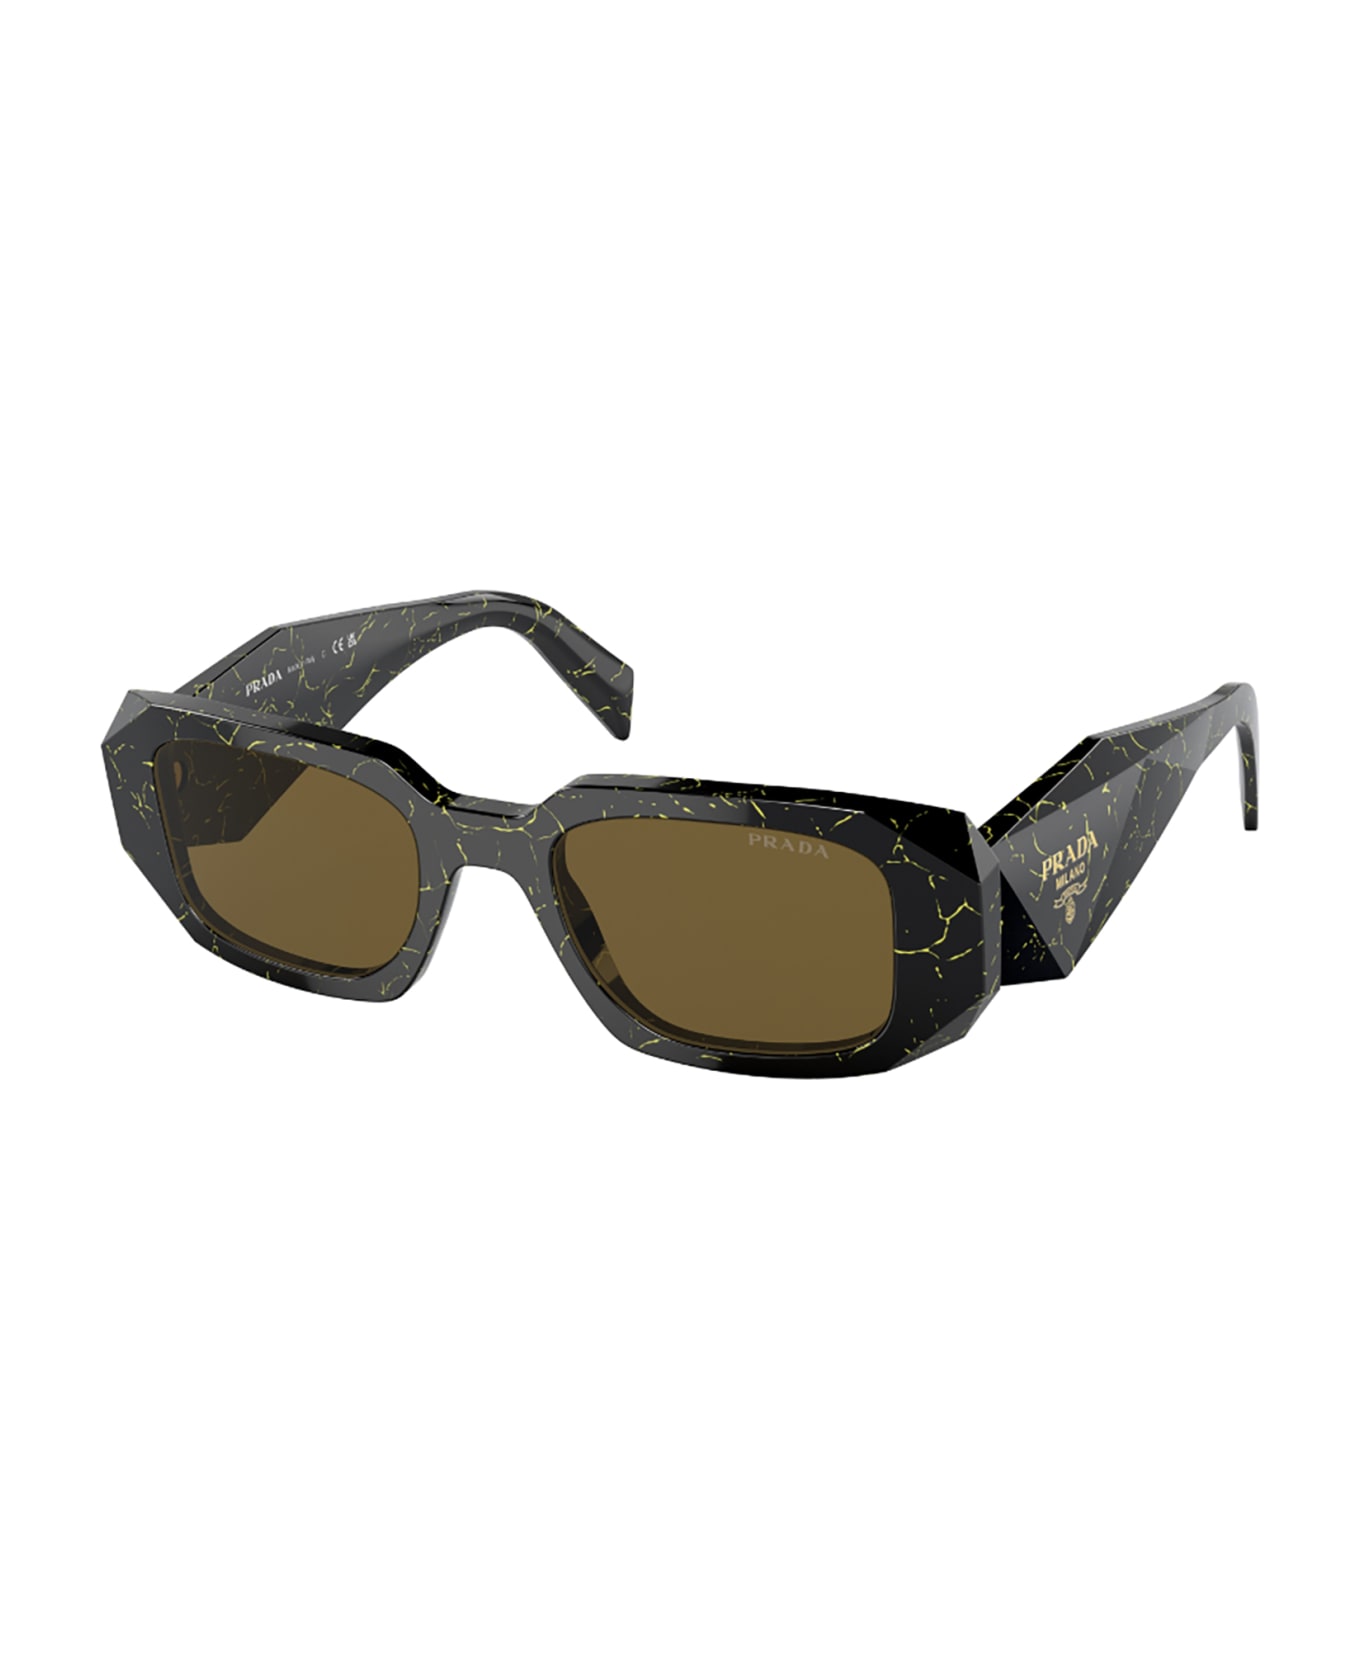 Prada Eyewear 17WS SOLE Sunglasses Maui - T